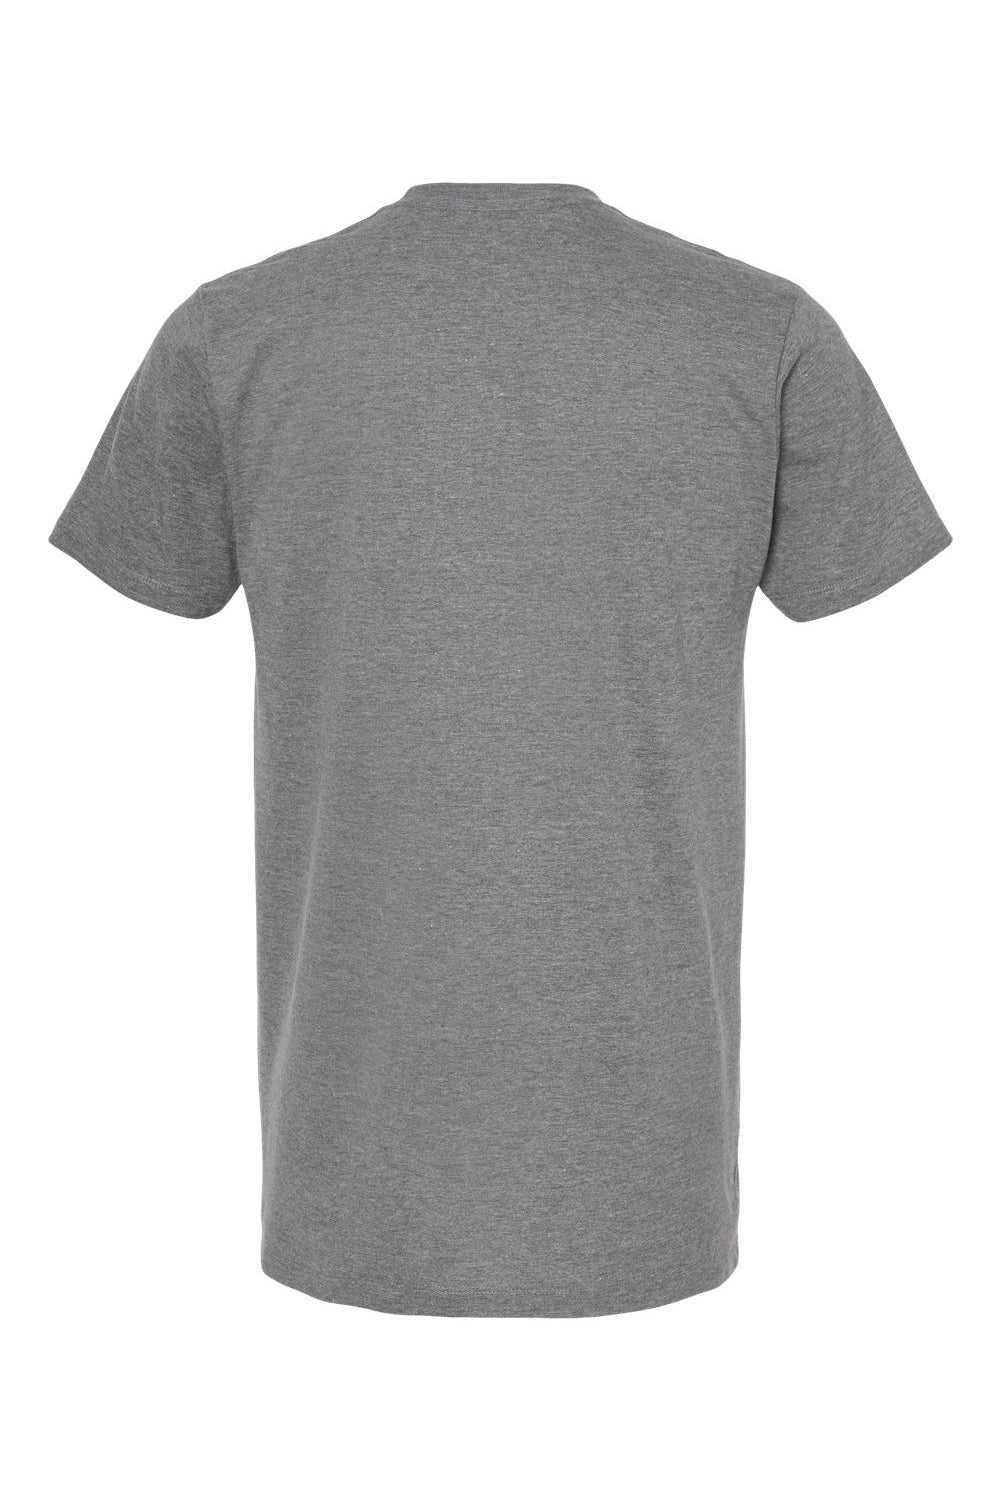 Tultex 541 Mens Premium Short Sleeve Crewneck T-Shirt Heather Grey Flat Back